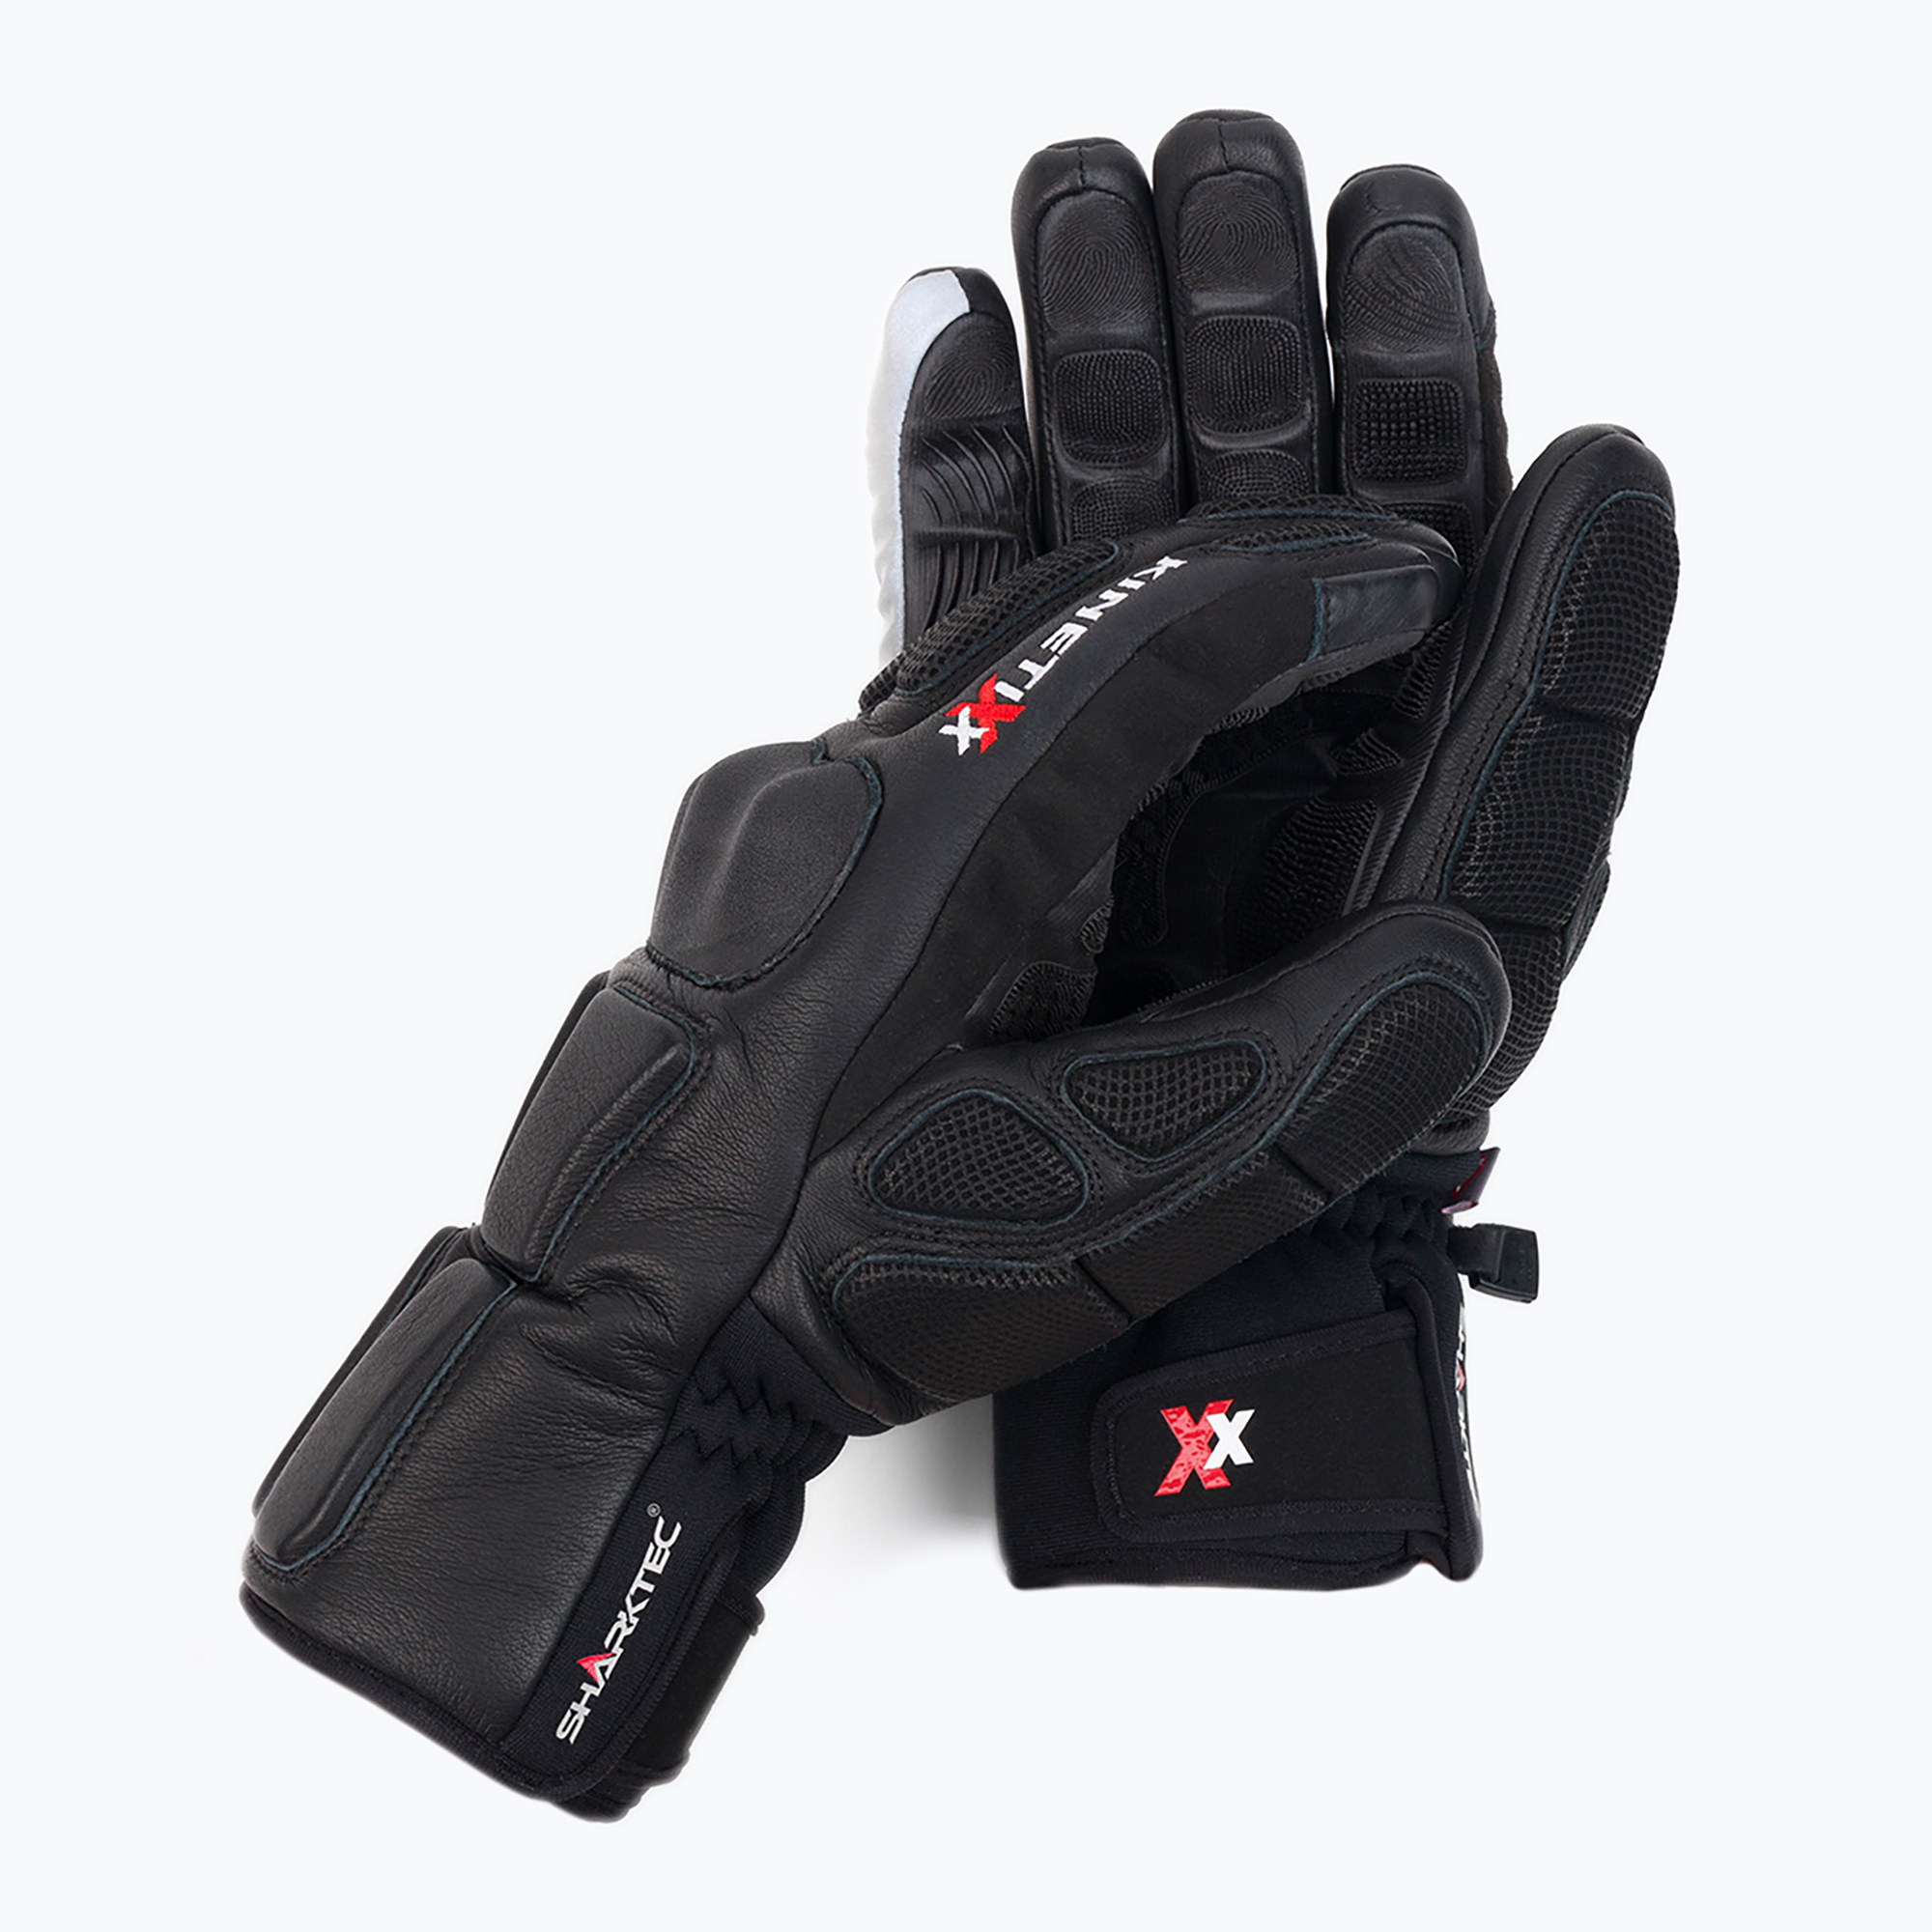 Pánske lyžiarske rukavice KinetiXx B červené 7019-290-01ecket Ski Alpin